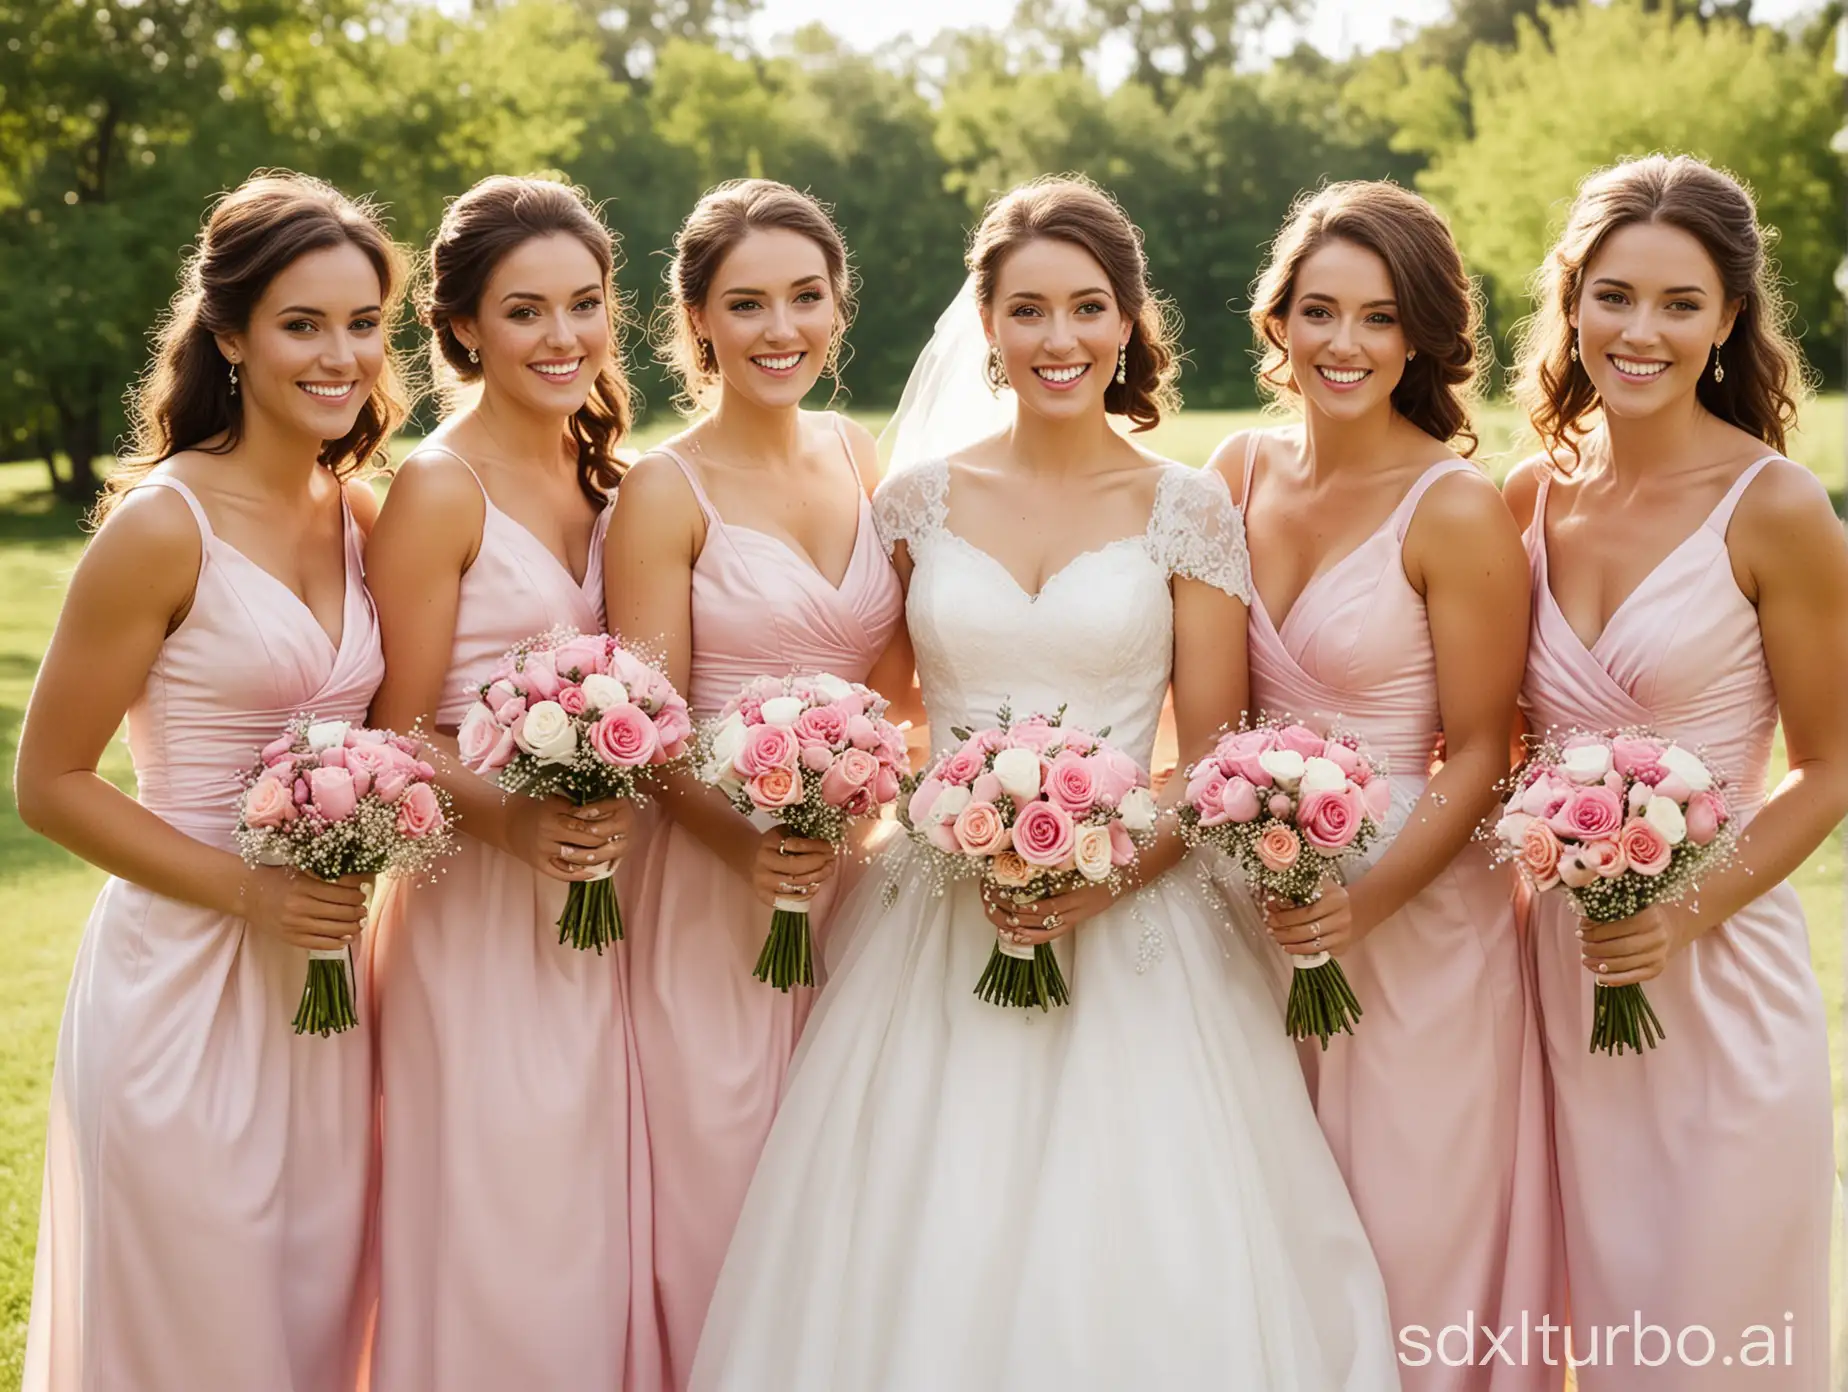 Joyful-Wedding-Scene-Bride-and-Bridesmaids-Smiling-in-Pink-Dresses